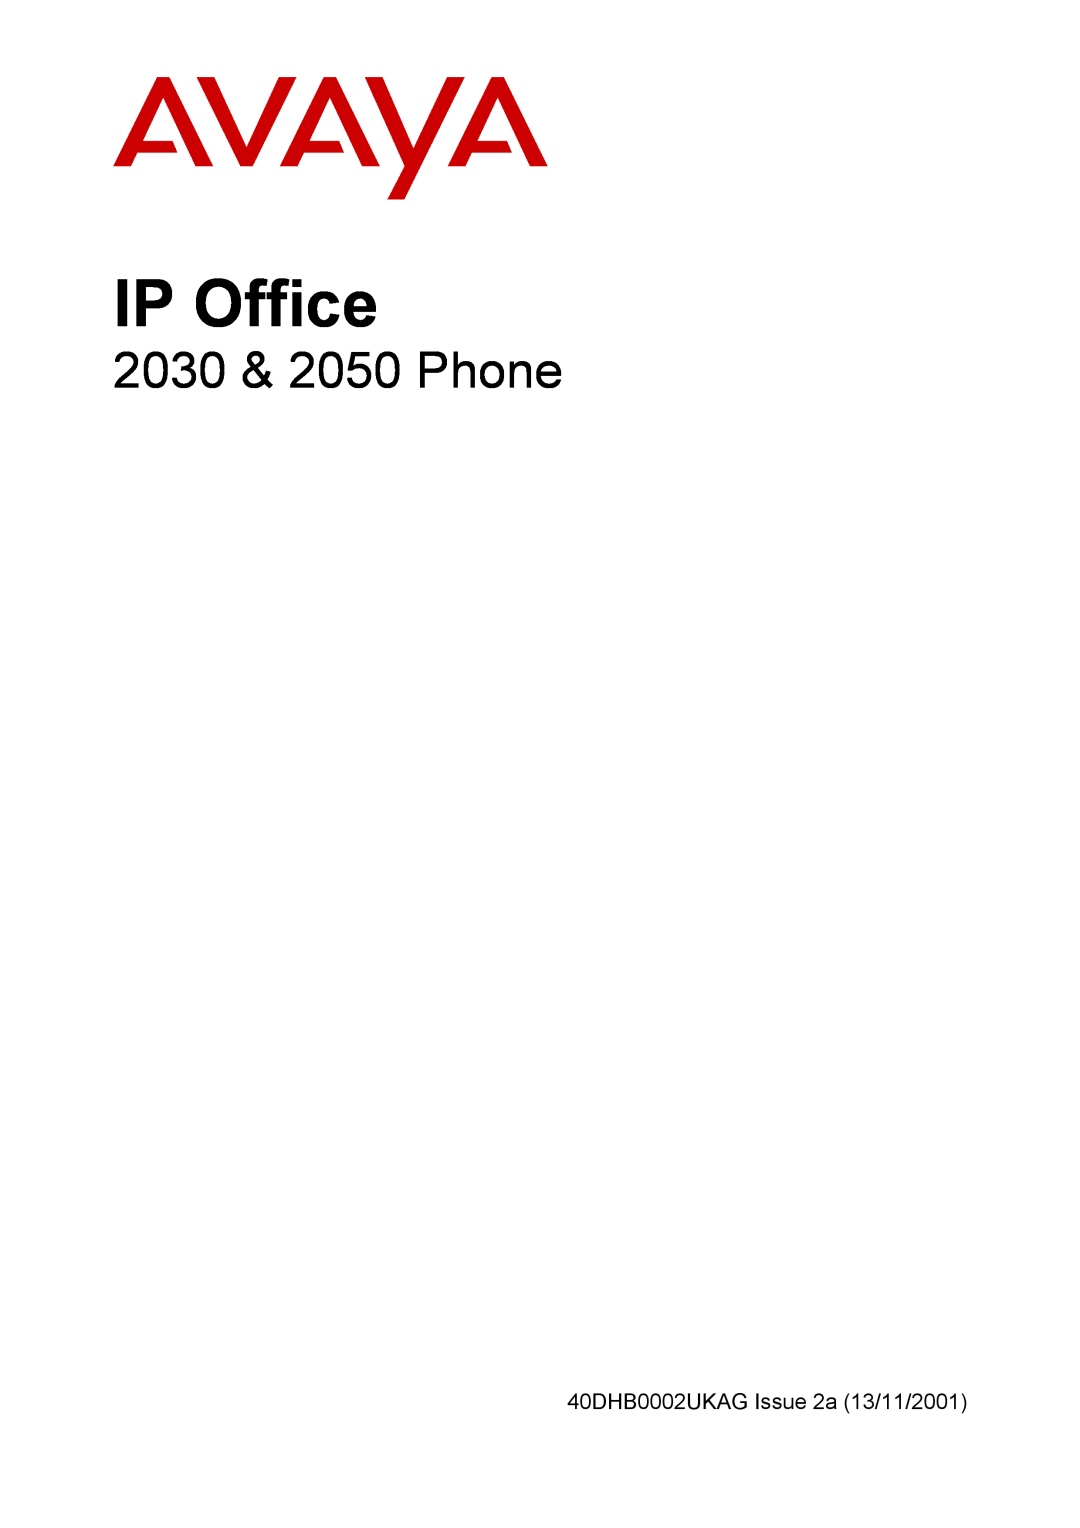 Avaya manual IP Office, 2030 & 2050 Phone, 40DHB0002UKAG Issue 2a 13/11/2001 